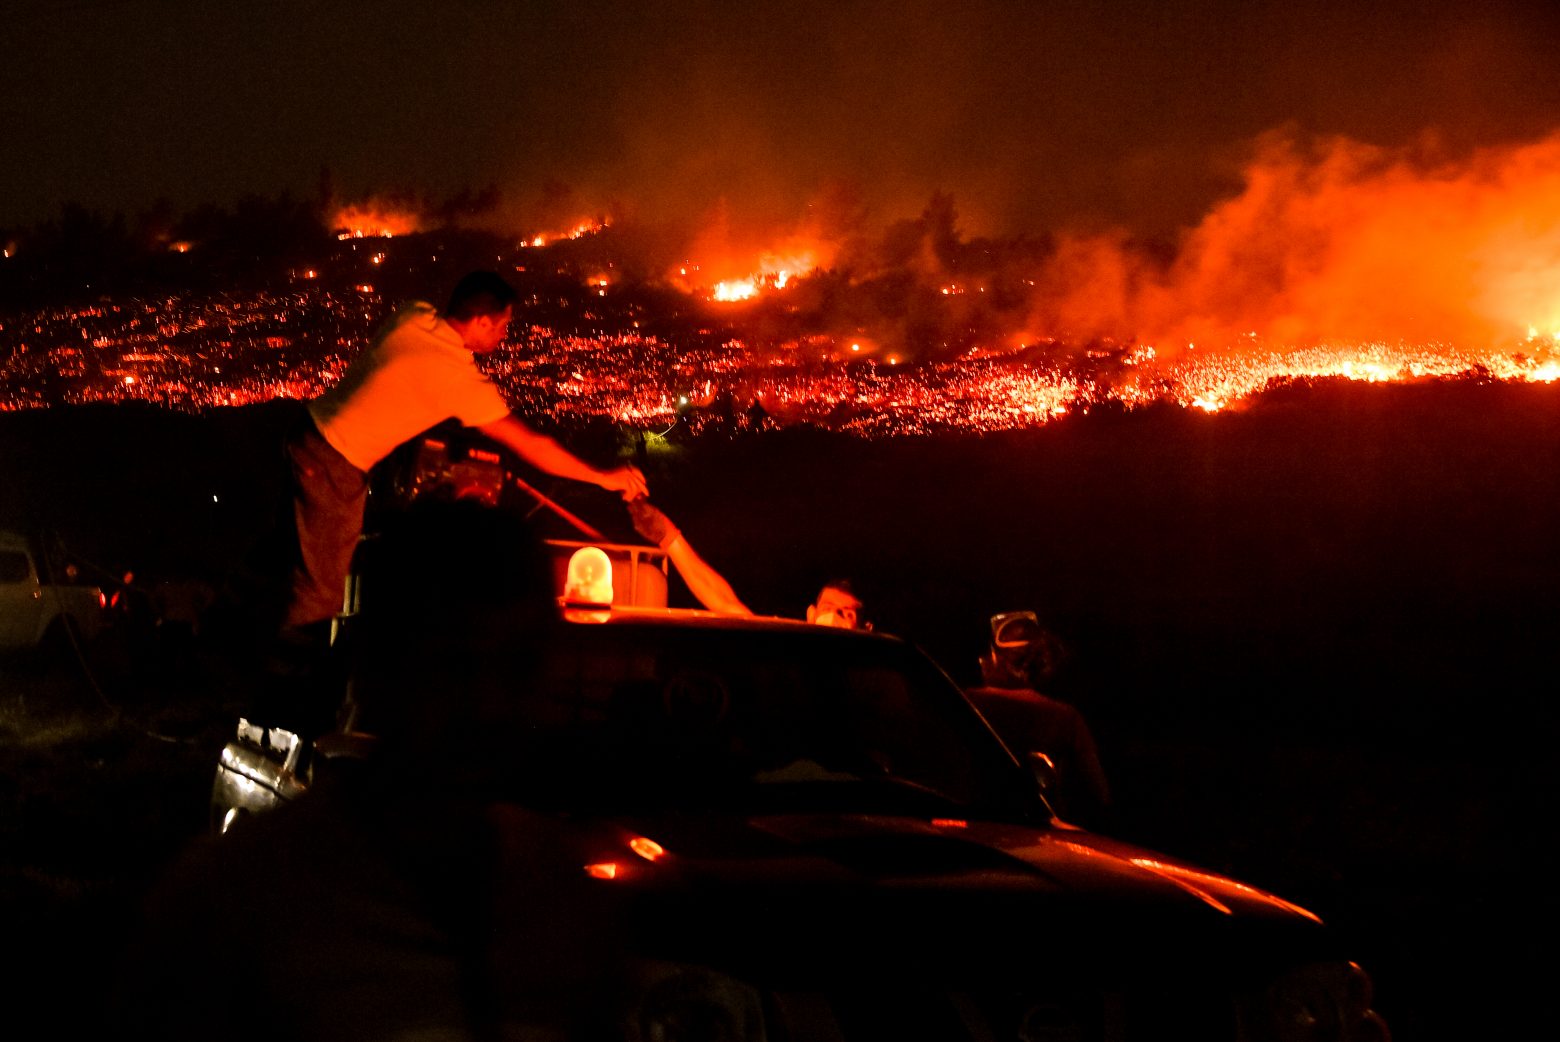 More information about "20.000 στρέμματα από τη μεγάλη φωτιά στην Πεντέλη - Η δορυφορική απεικόνιση"